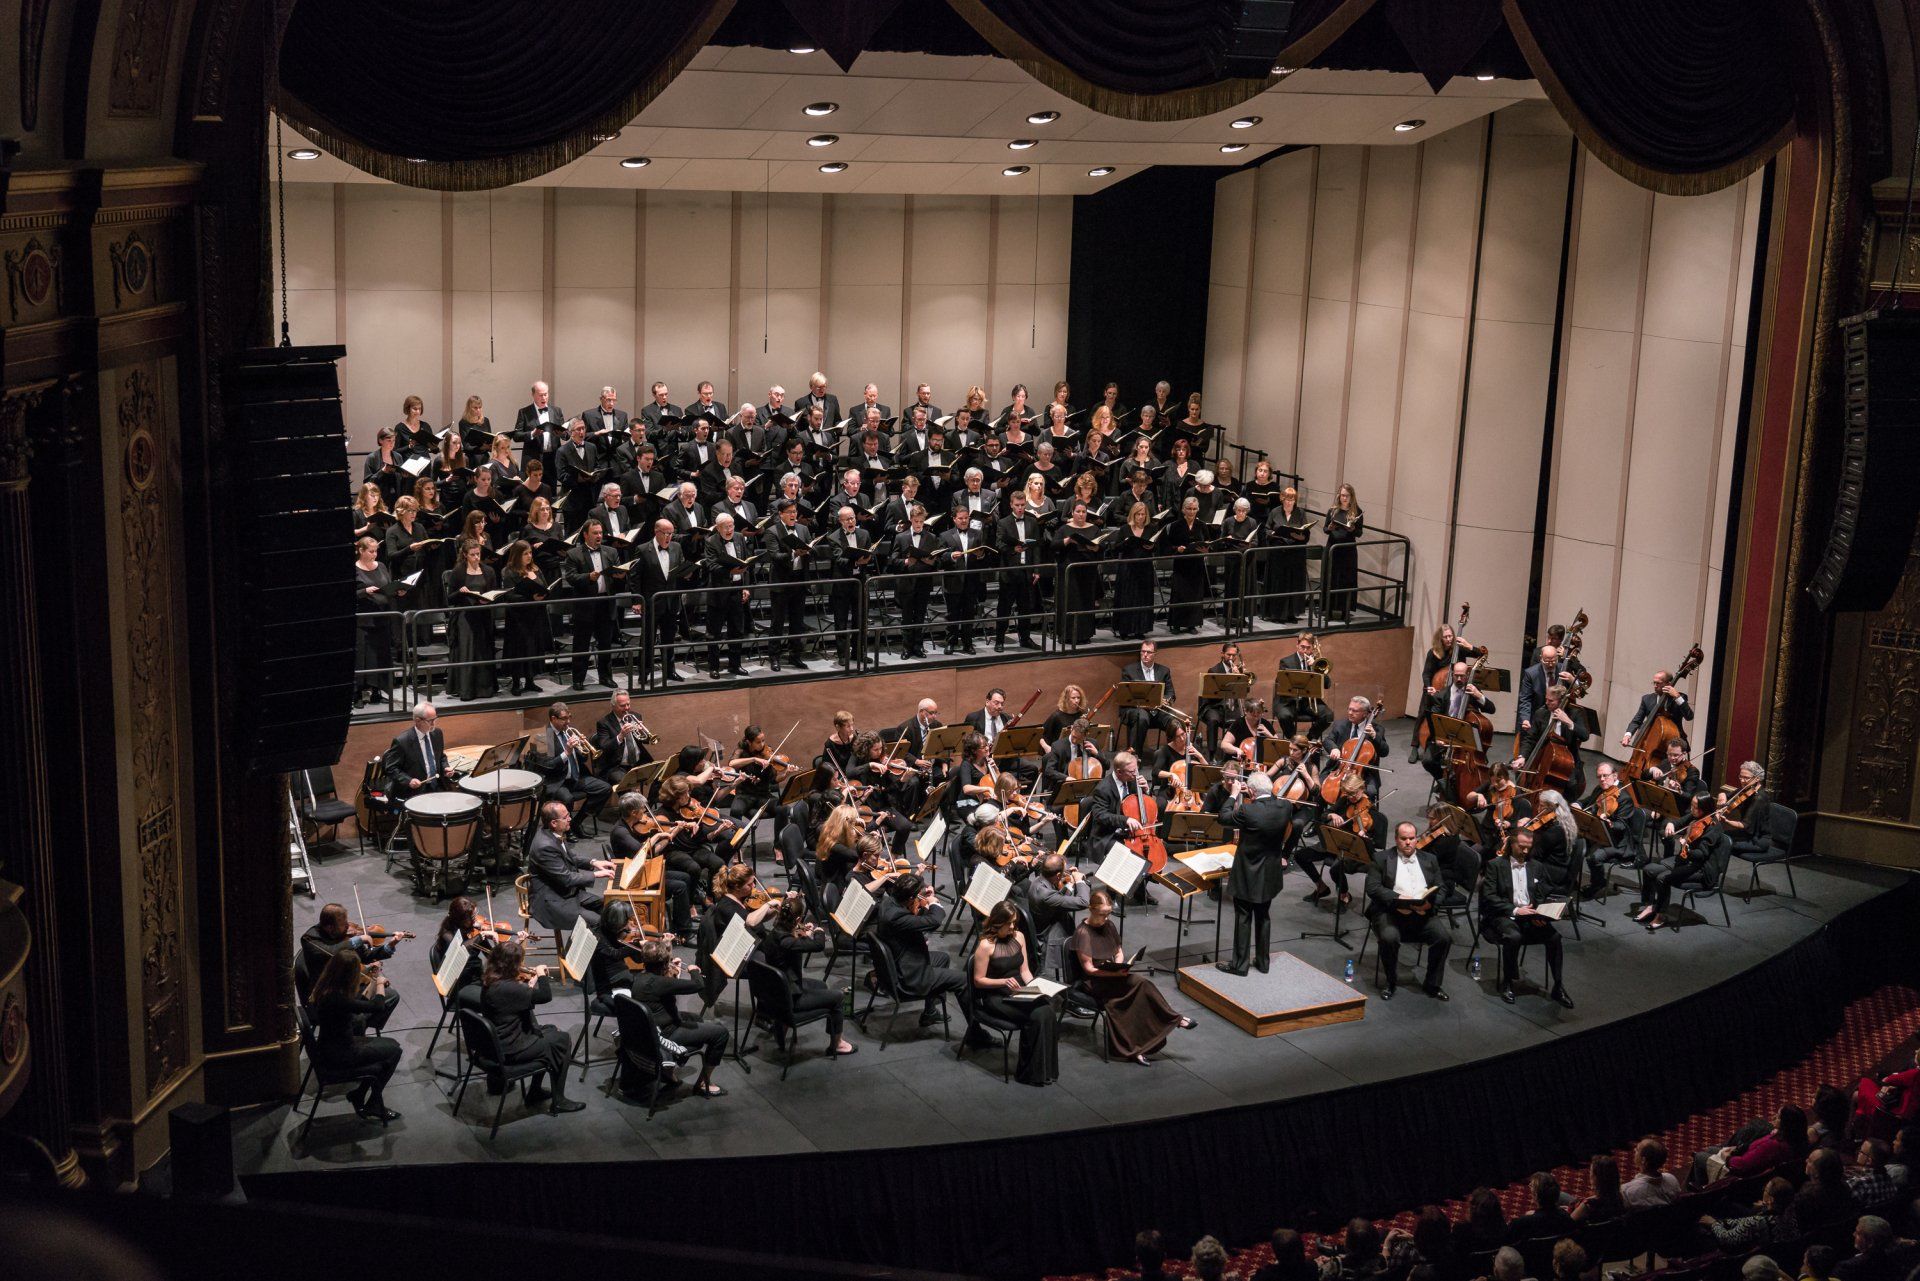 RI Philharmonic Music School’s Youth Symphonic Wind Ensemble joins the